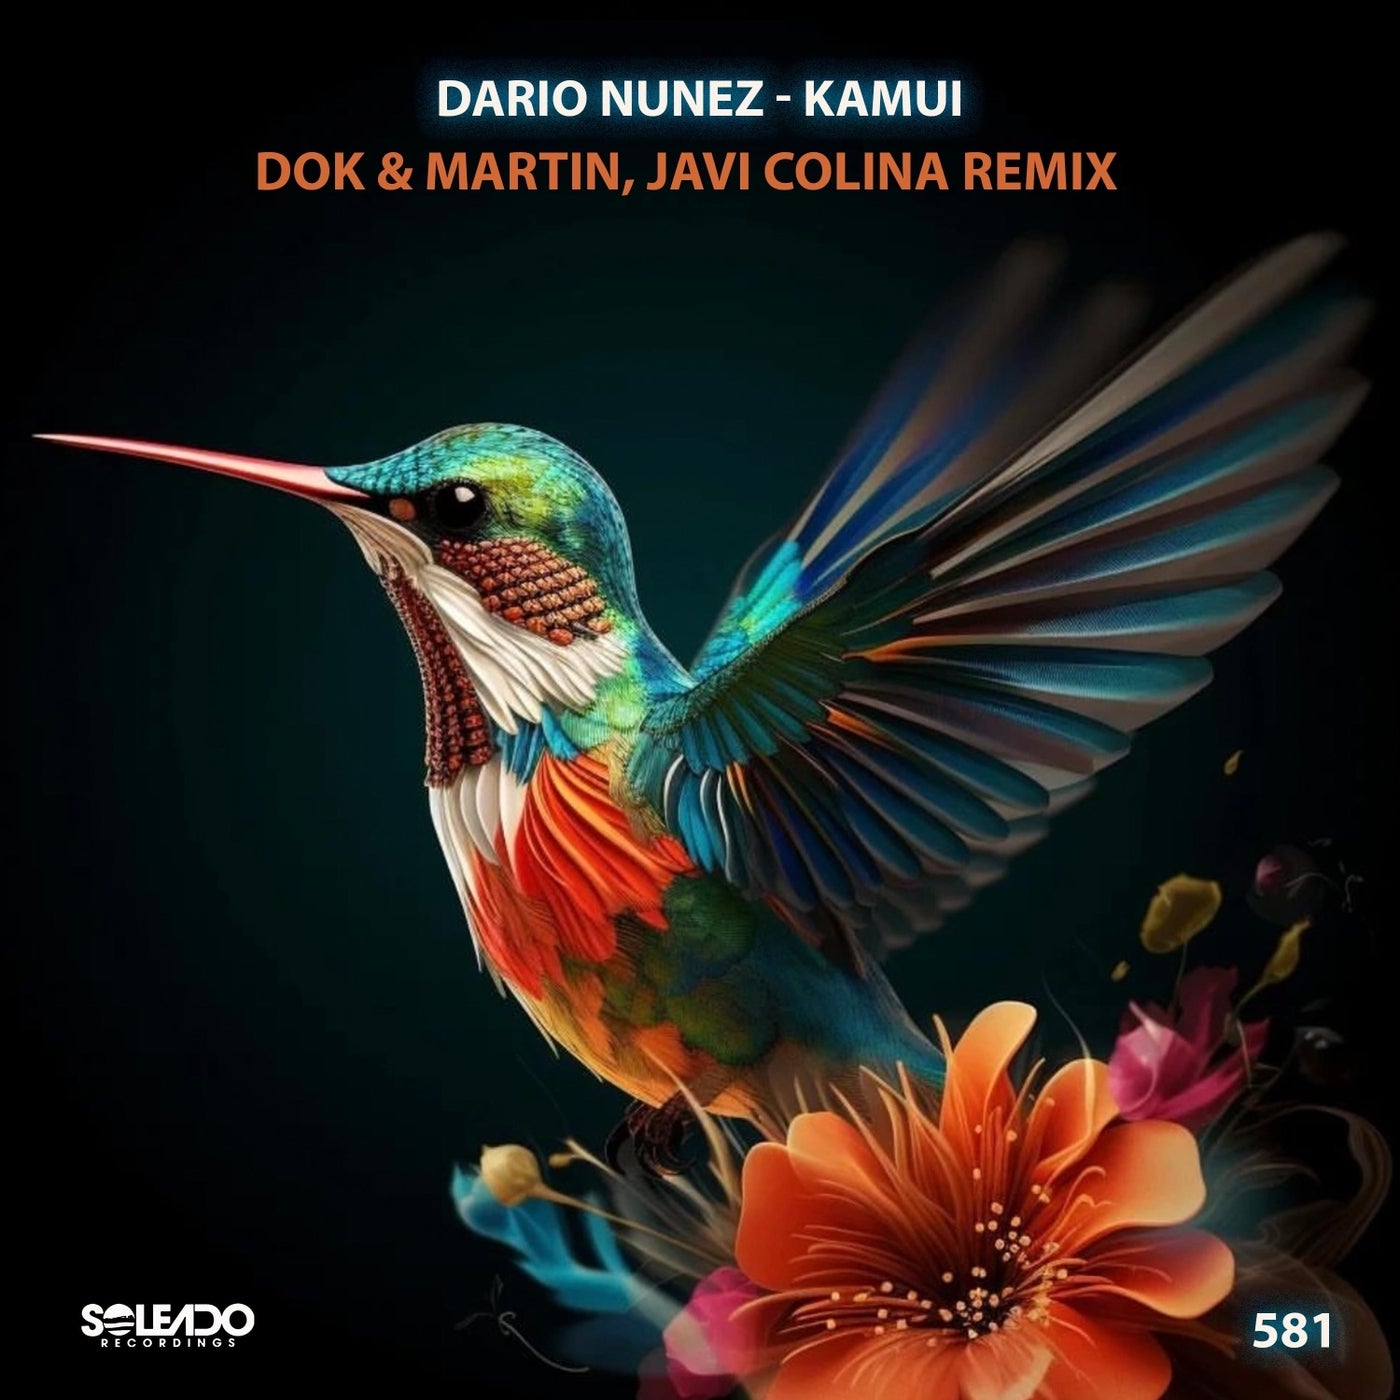 image cover: Dario Nunez - Kamui (Dok & Martin, Javi Colina remix) on Soleado Recordings